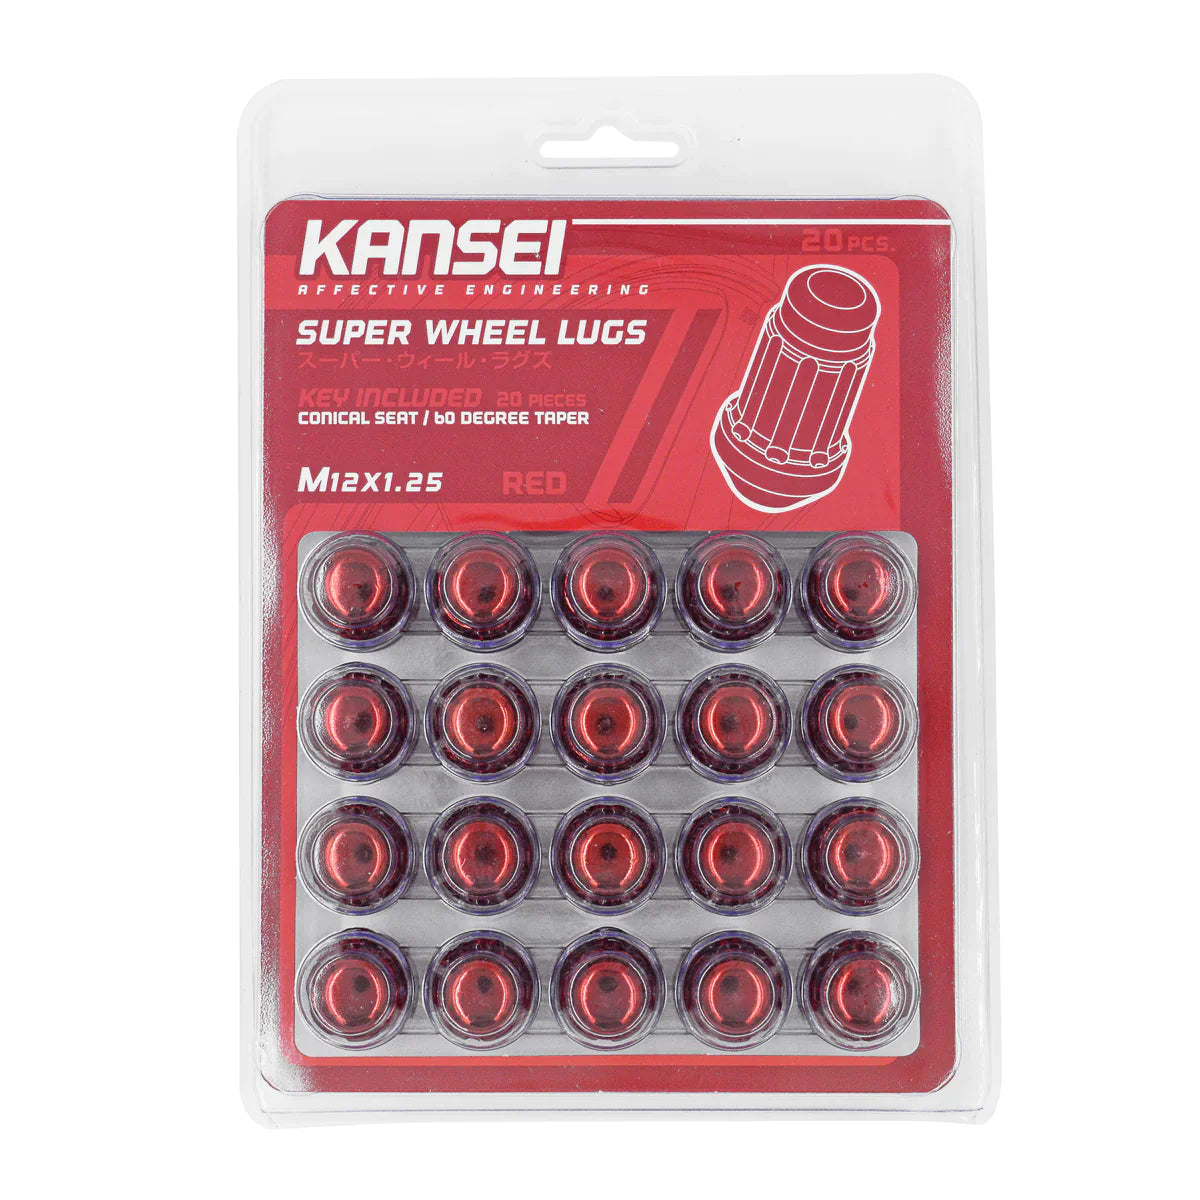 Kansei Lug Nuts - Red - 12x1.5